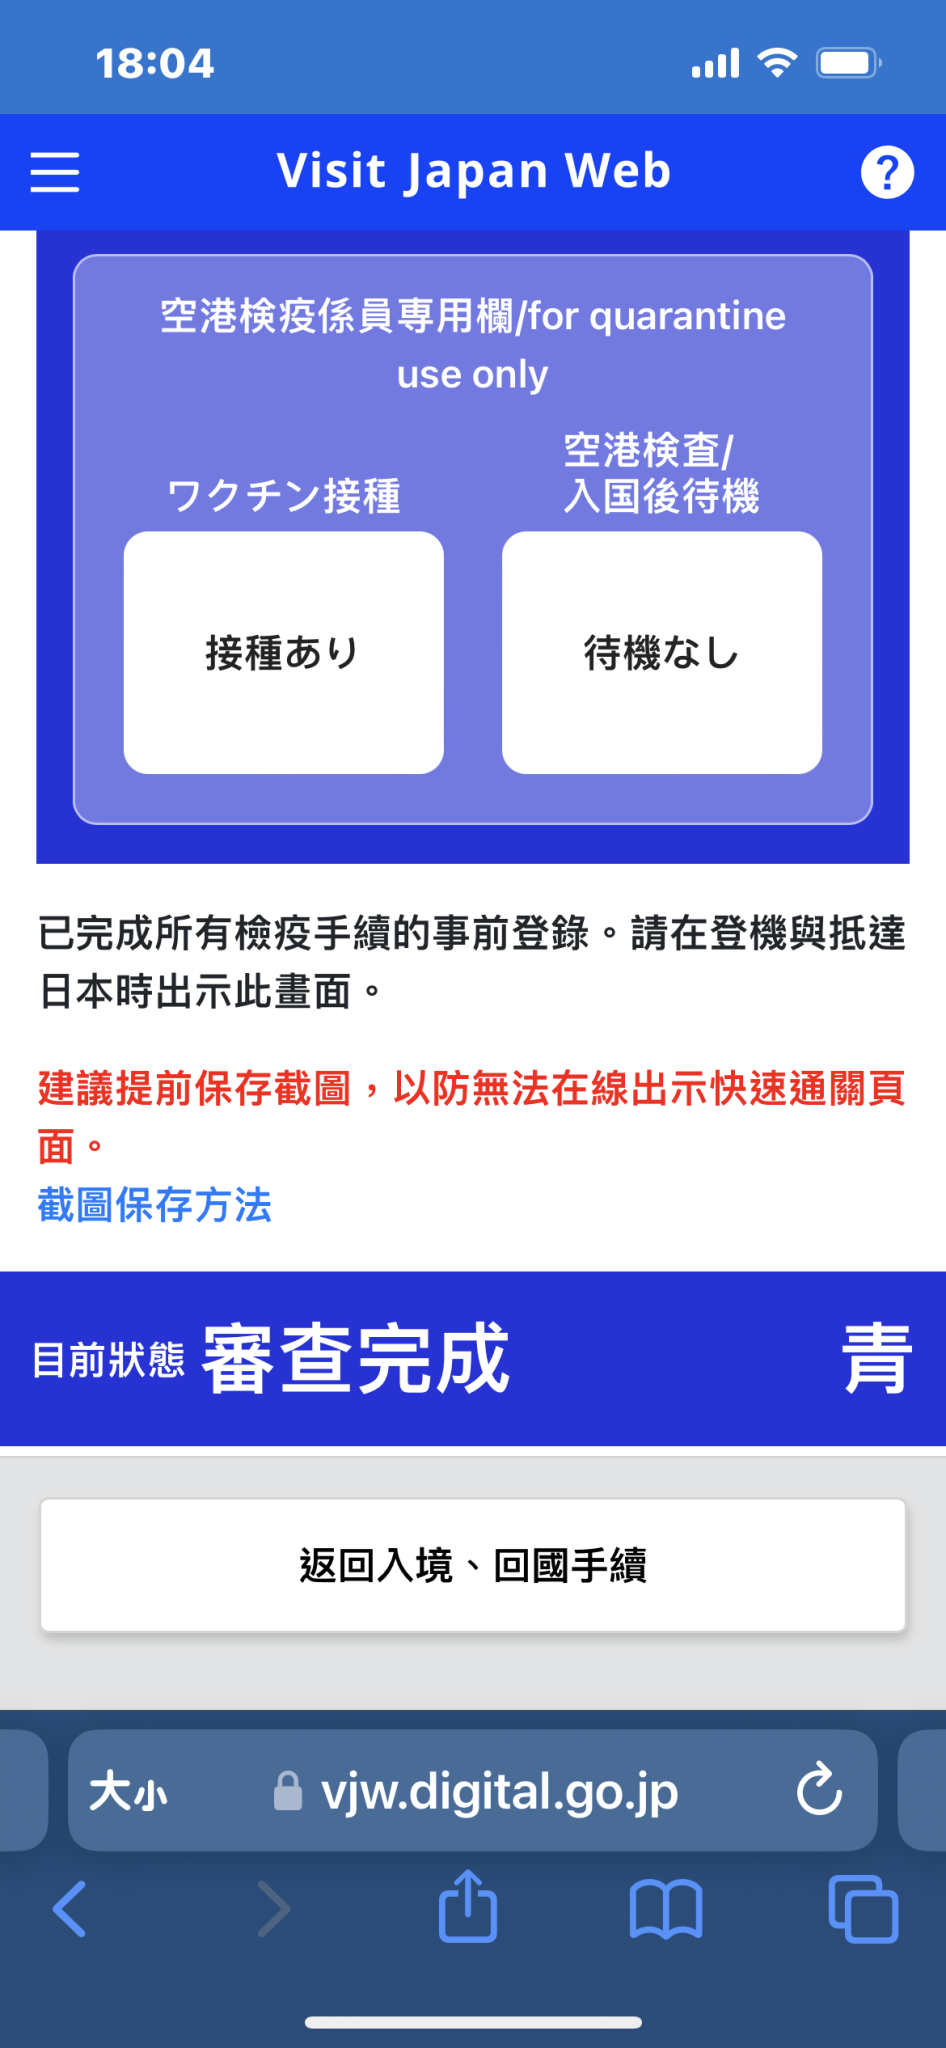 visit japan web error